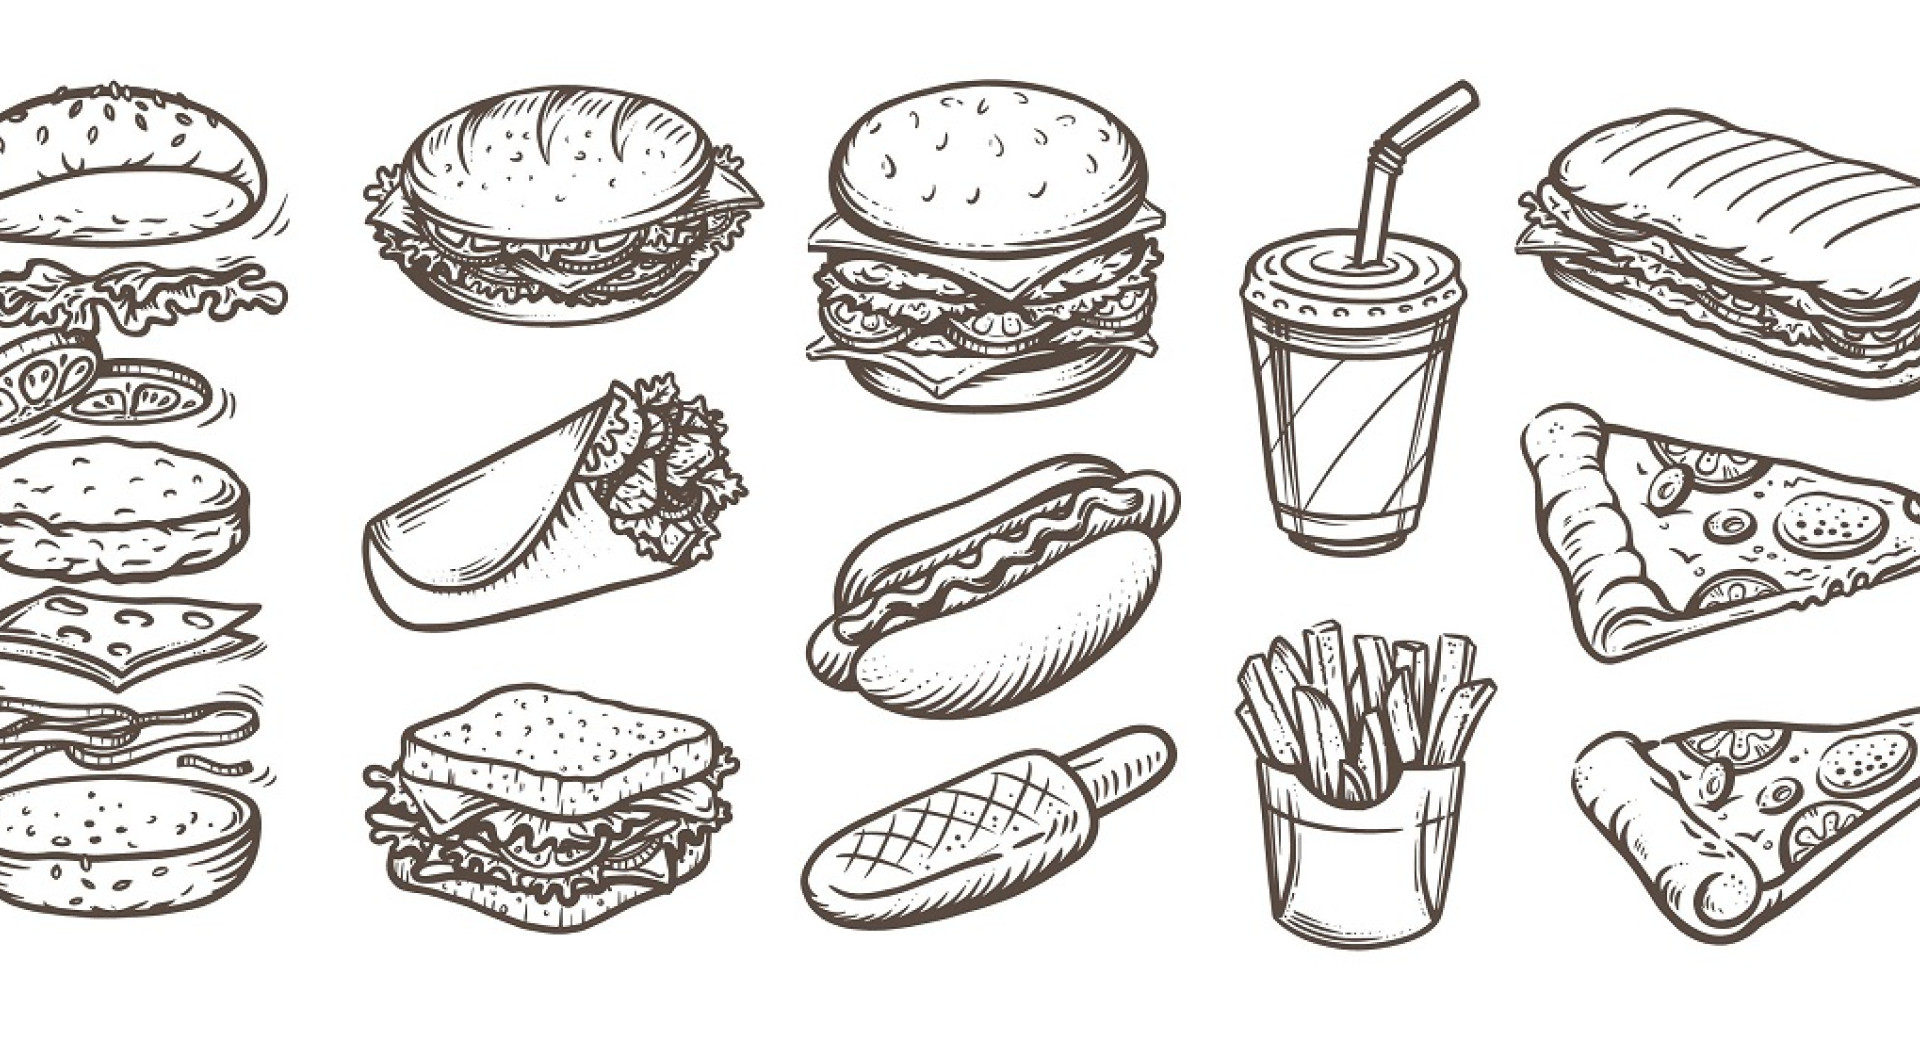 Drawn fast food. Hamburger, hot dog, pizza,  french fries, sandwich.